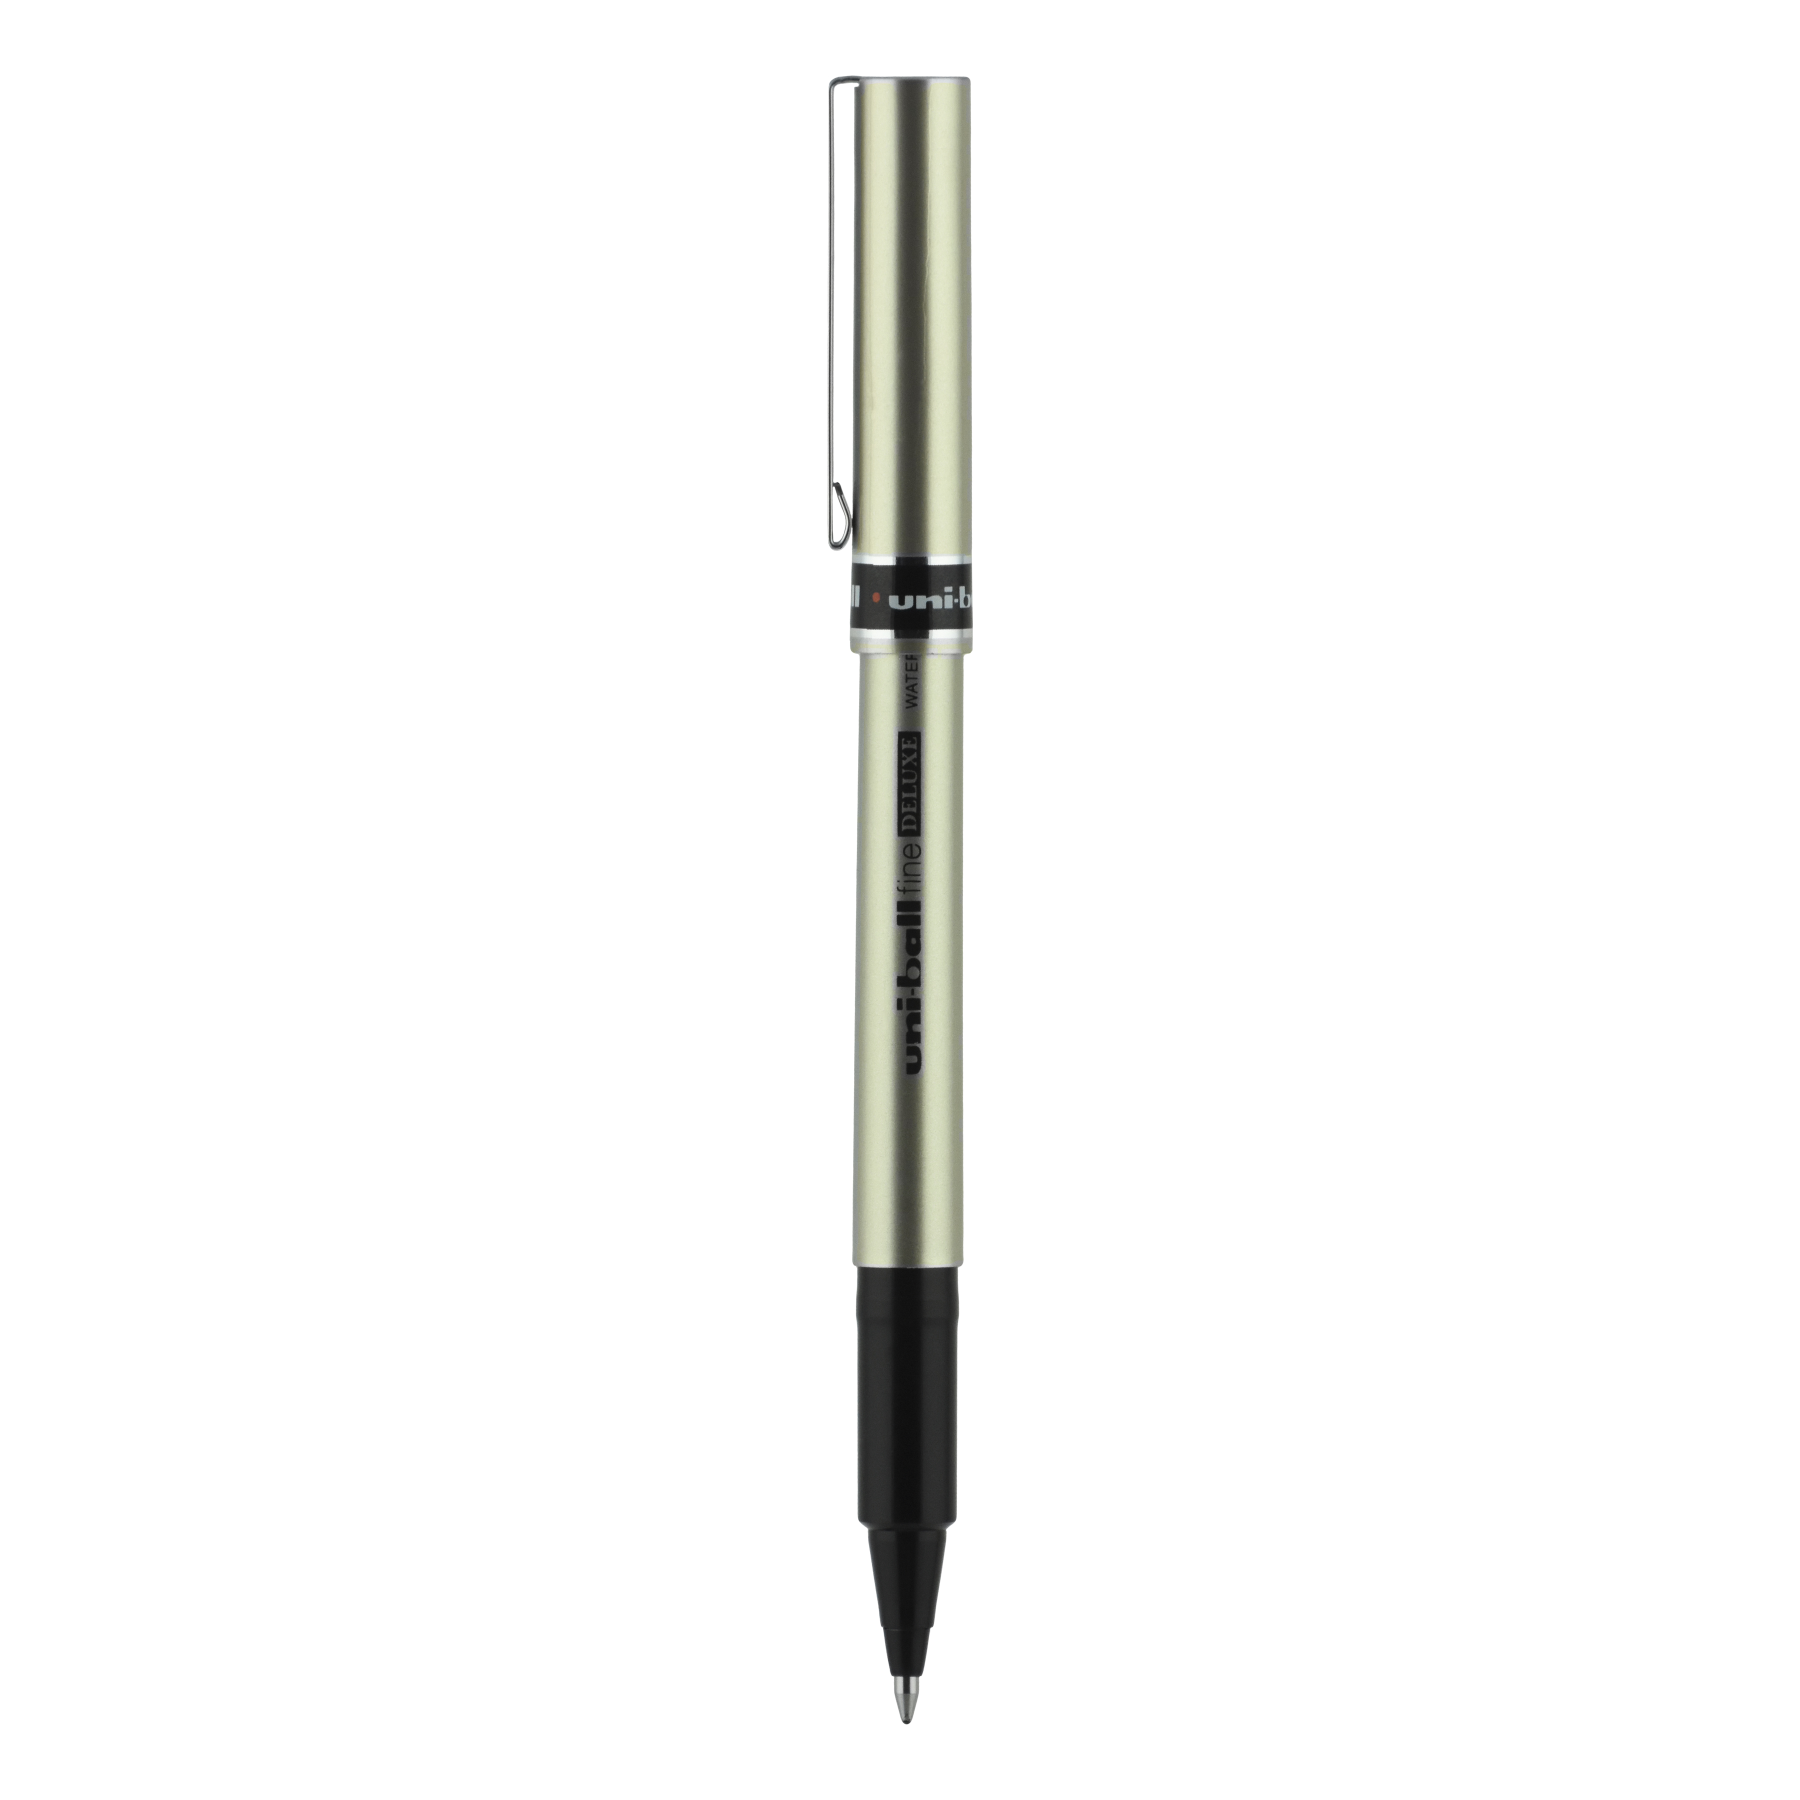 Uni Pin Fineliner Black Drawing Pen Set of 12 – Anandha Stationery